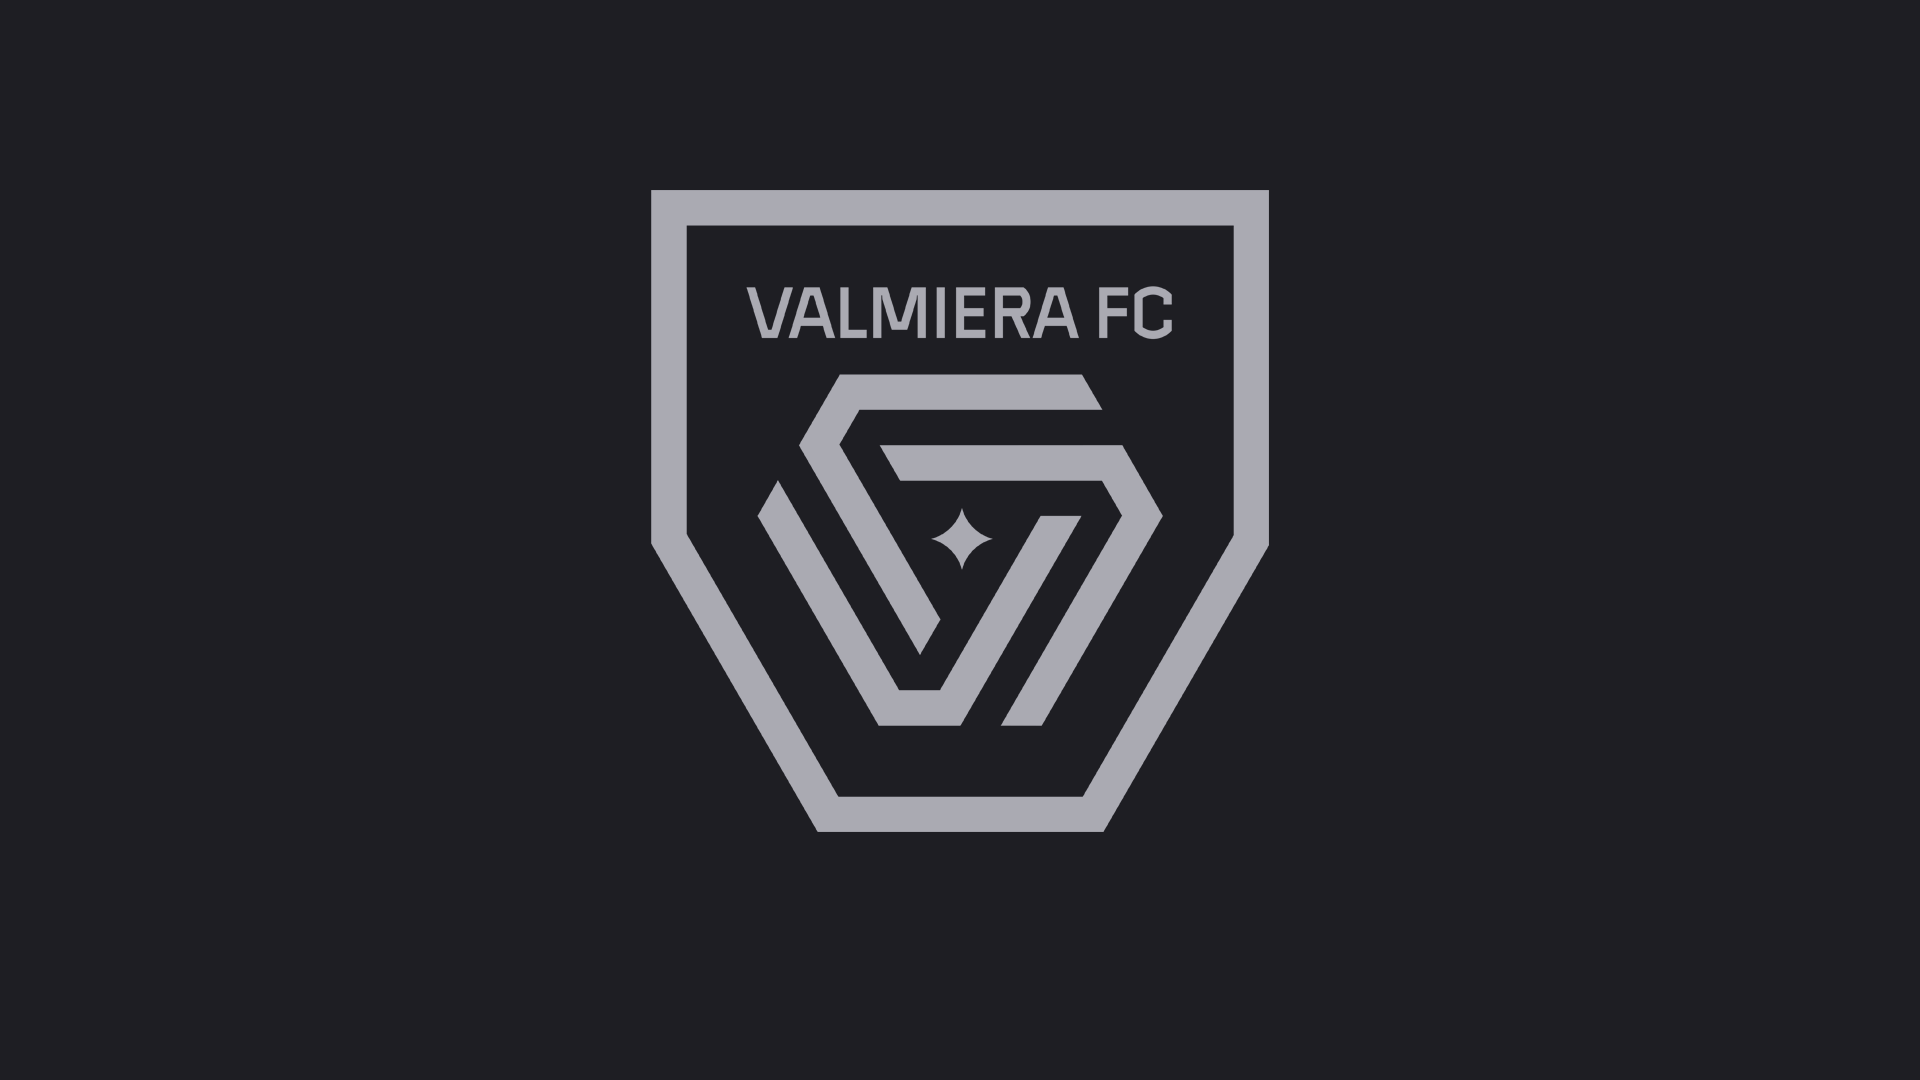 VALMIERA FC